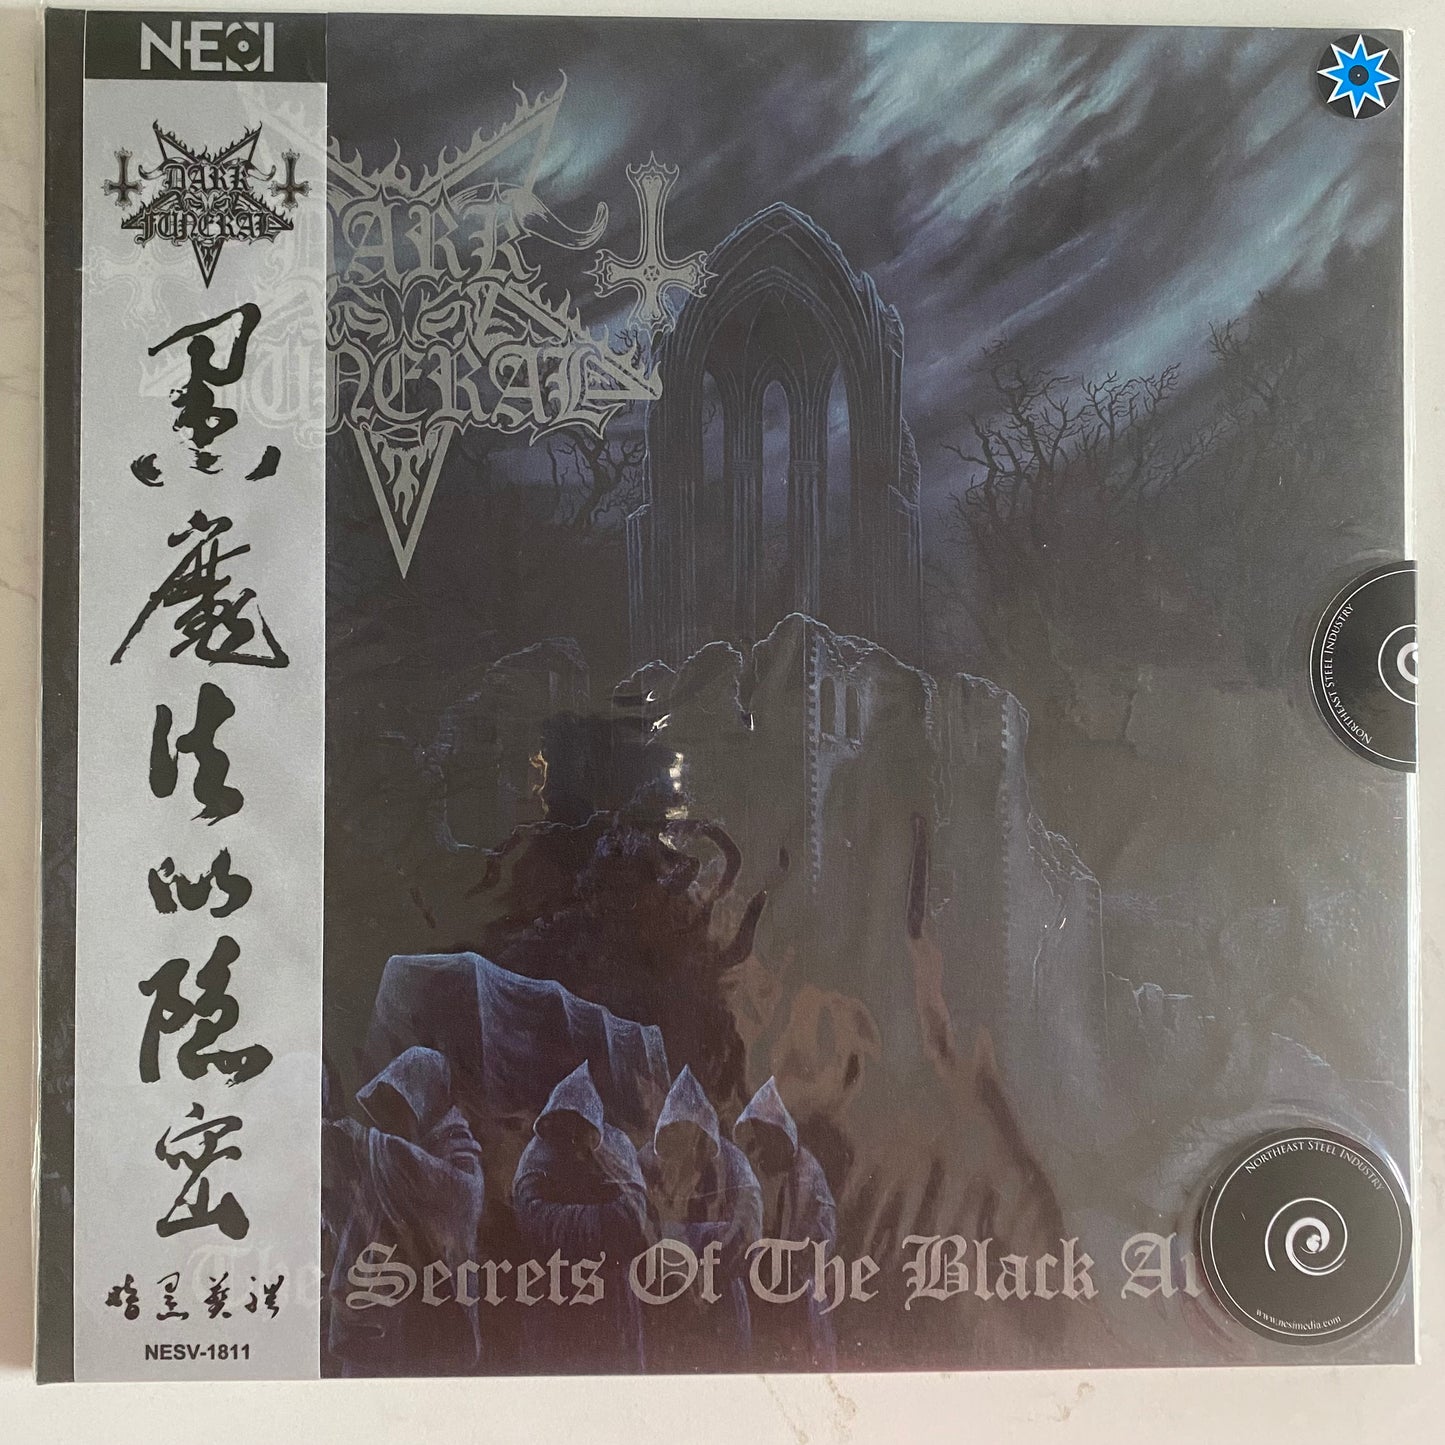 Dark Funeral - The Secrets Of The Black Arts (LP, Album, Ltd, Num, RE, Bla). SEALED! ROCK